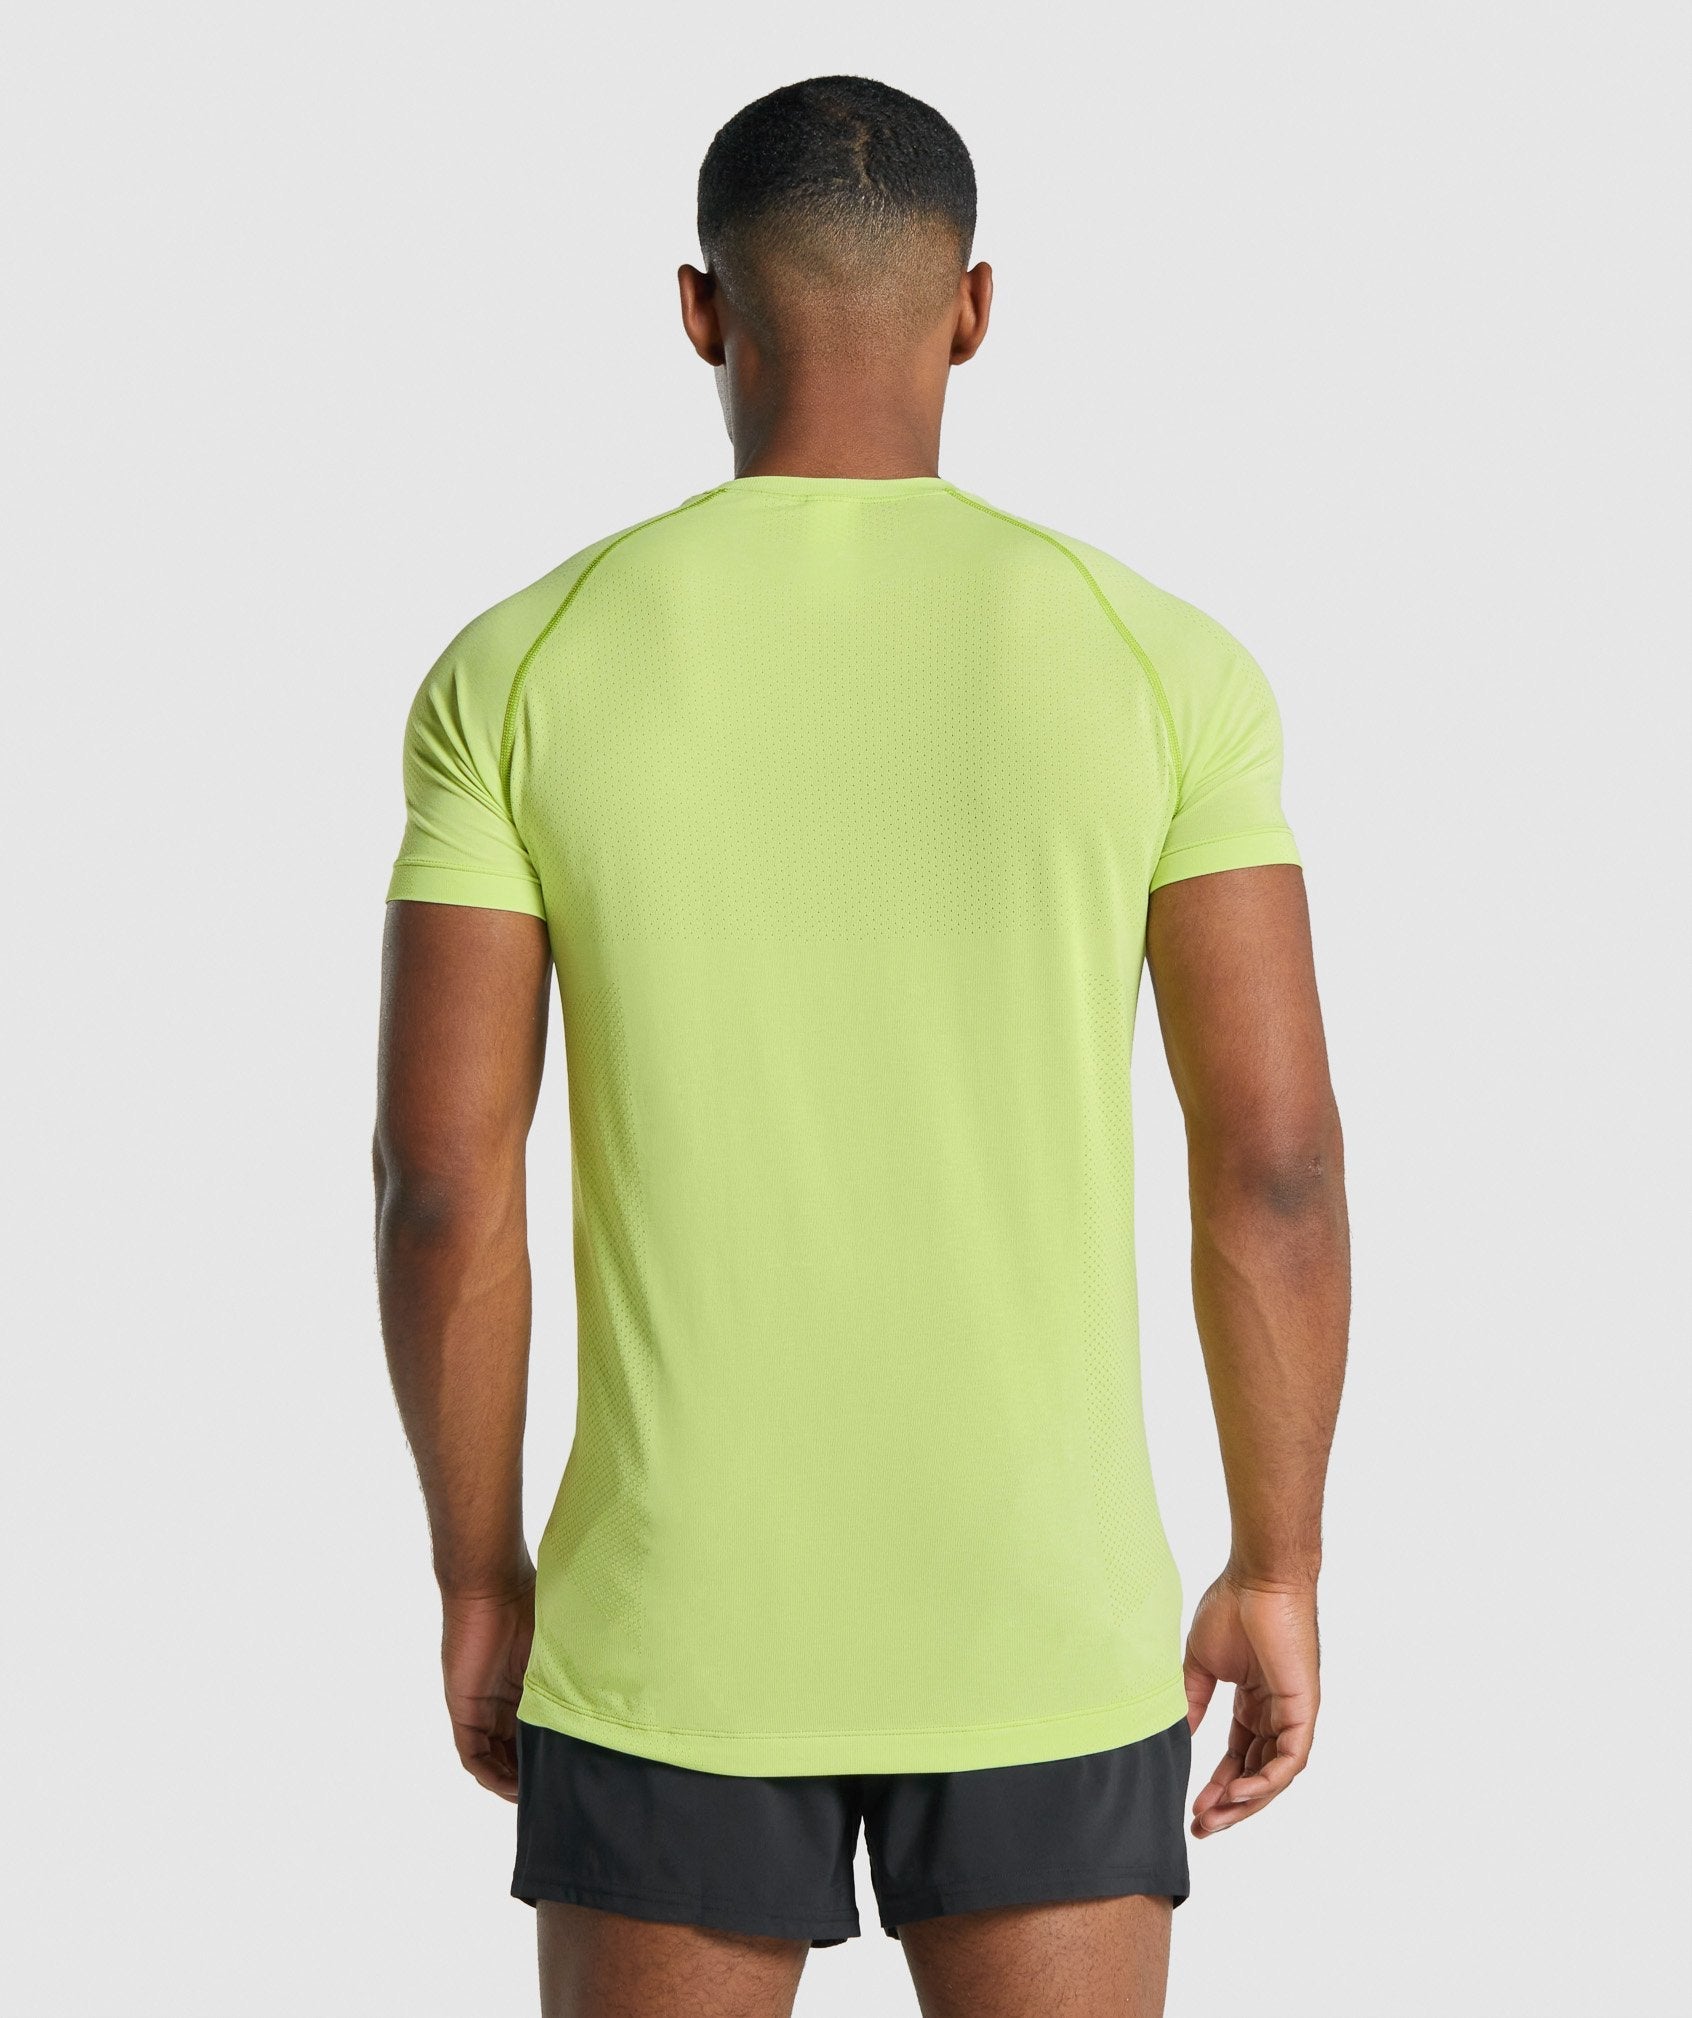 Vital Light seamless T-Shirt in Yellow Marl - view 2